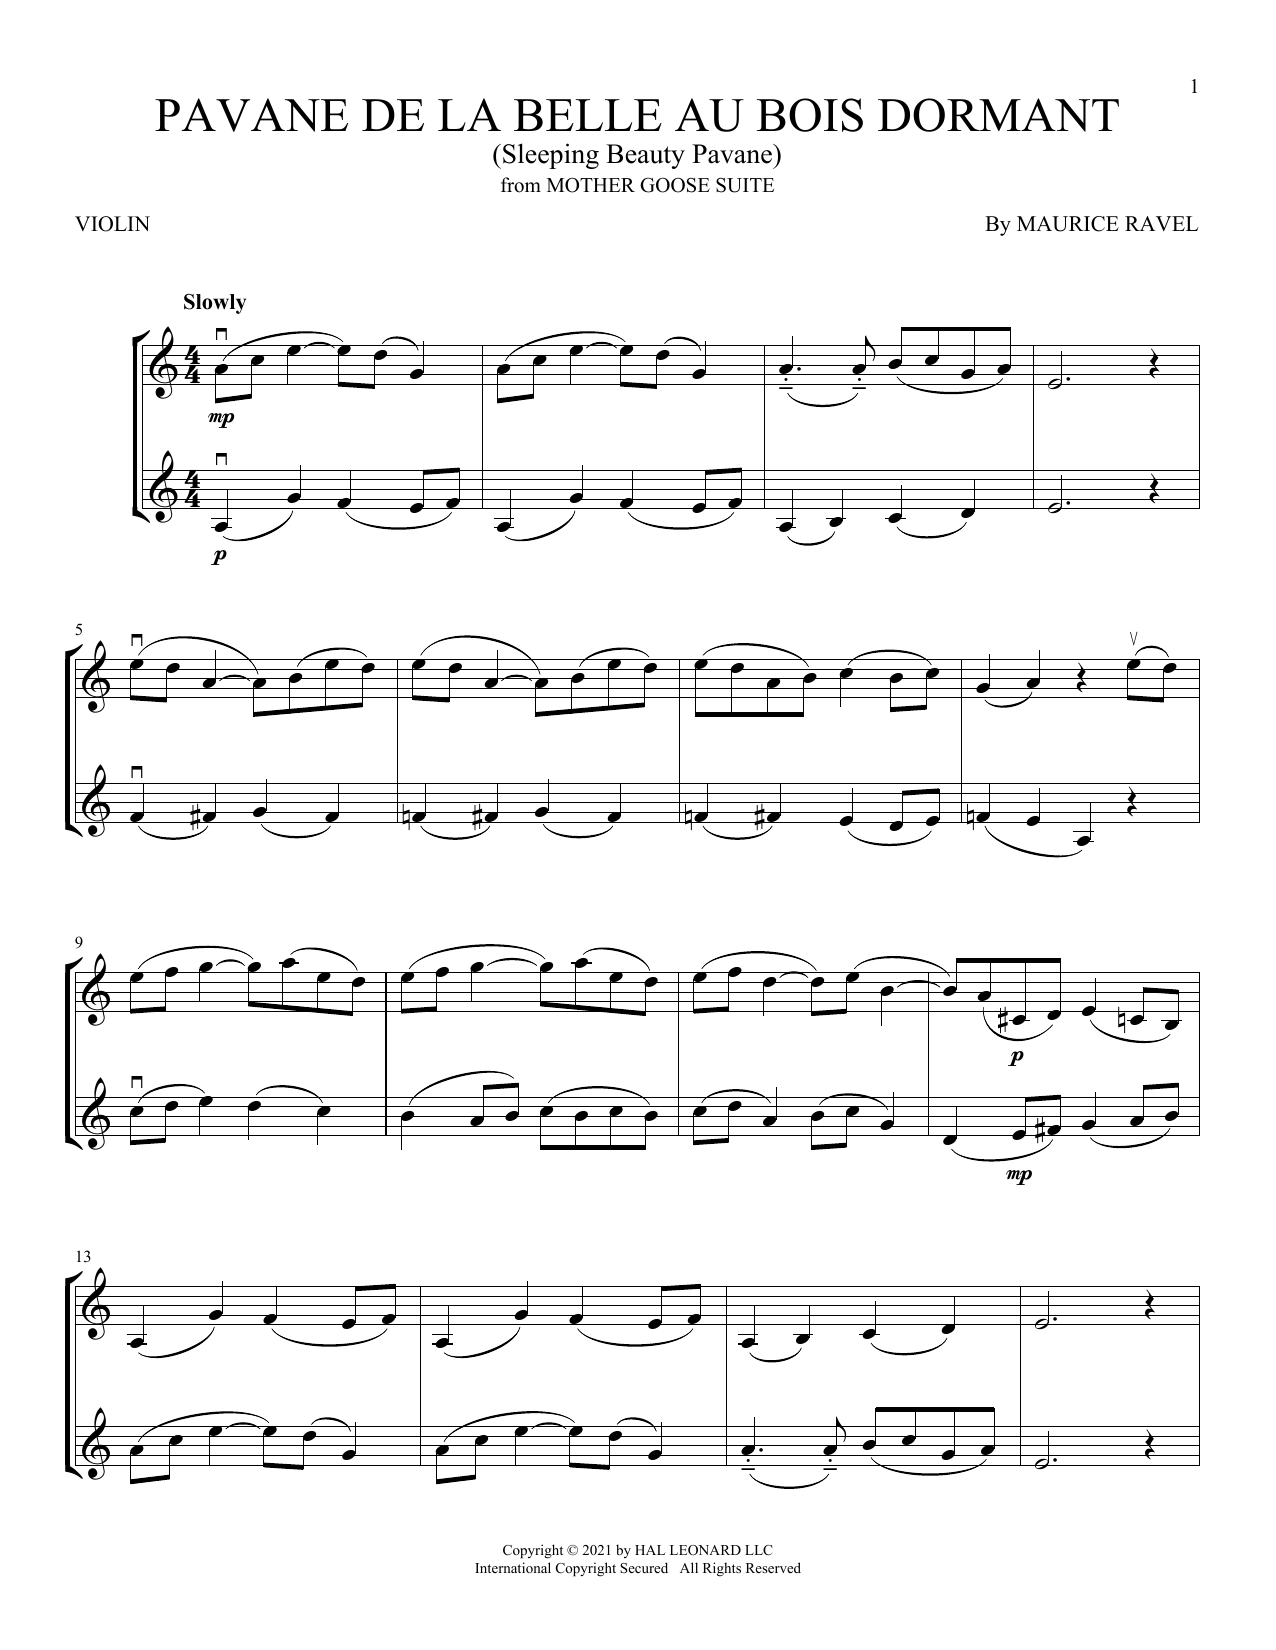 Maurice Ravel Pavane de la belle au bois dormant (Sleeping Beauty Pavane) Sheet Music Notes & Chords for Violin Duet - Download or Print PDF